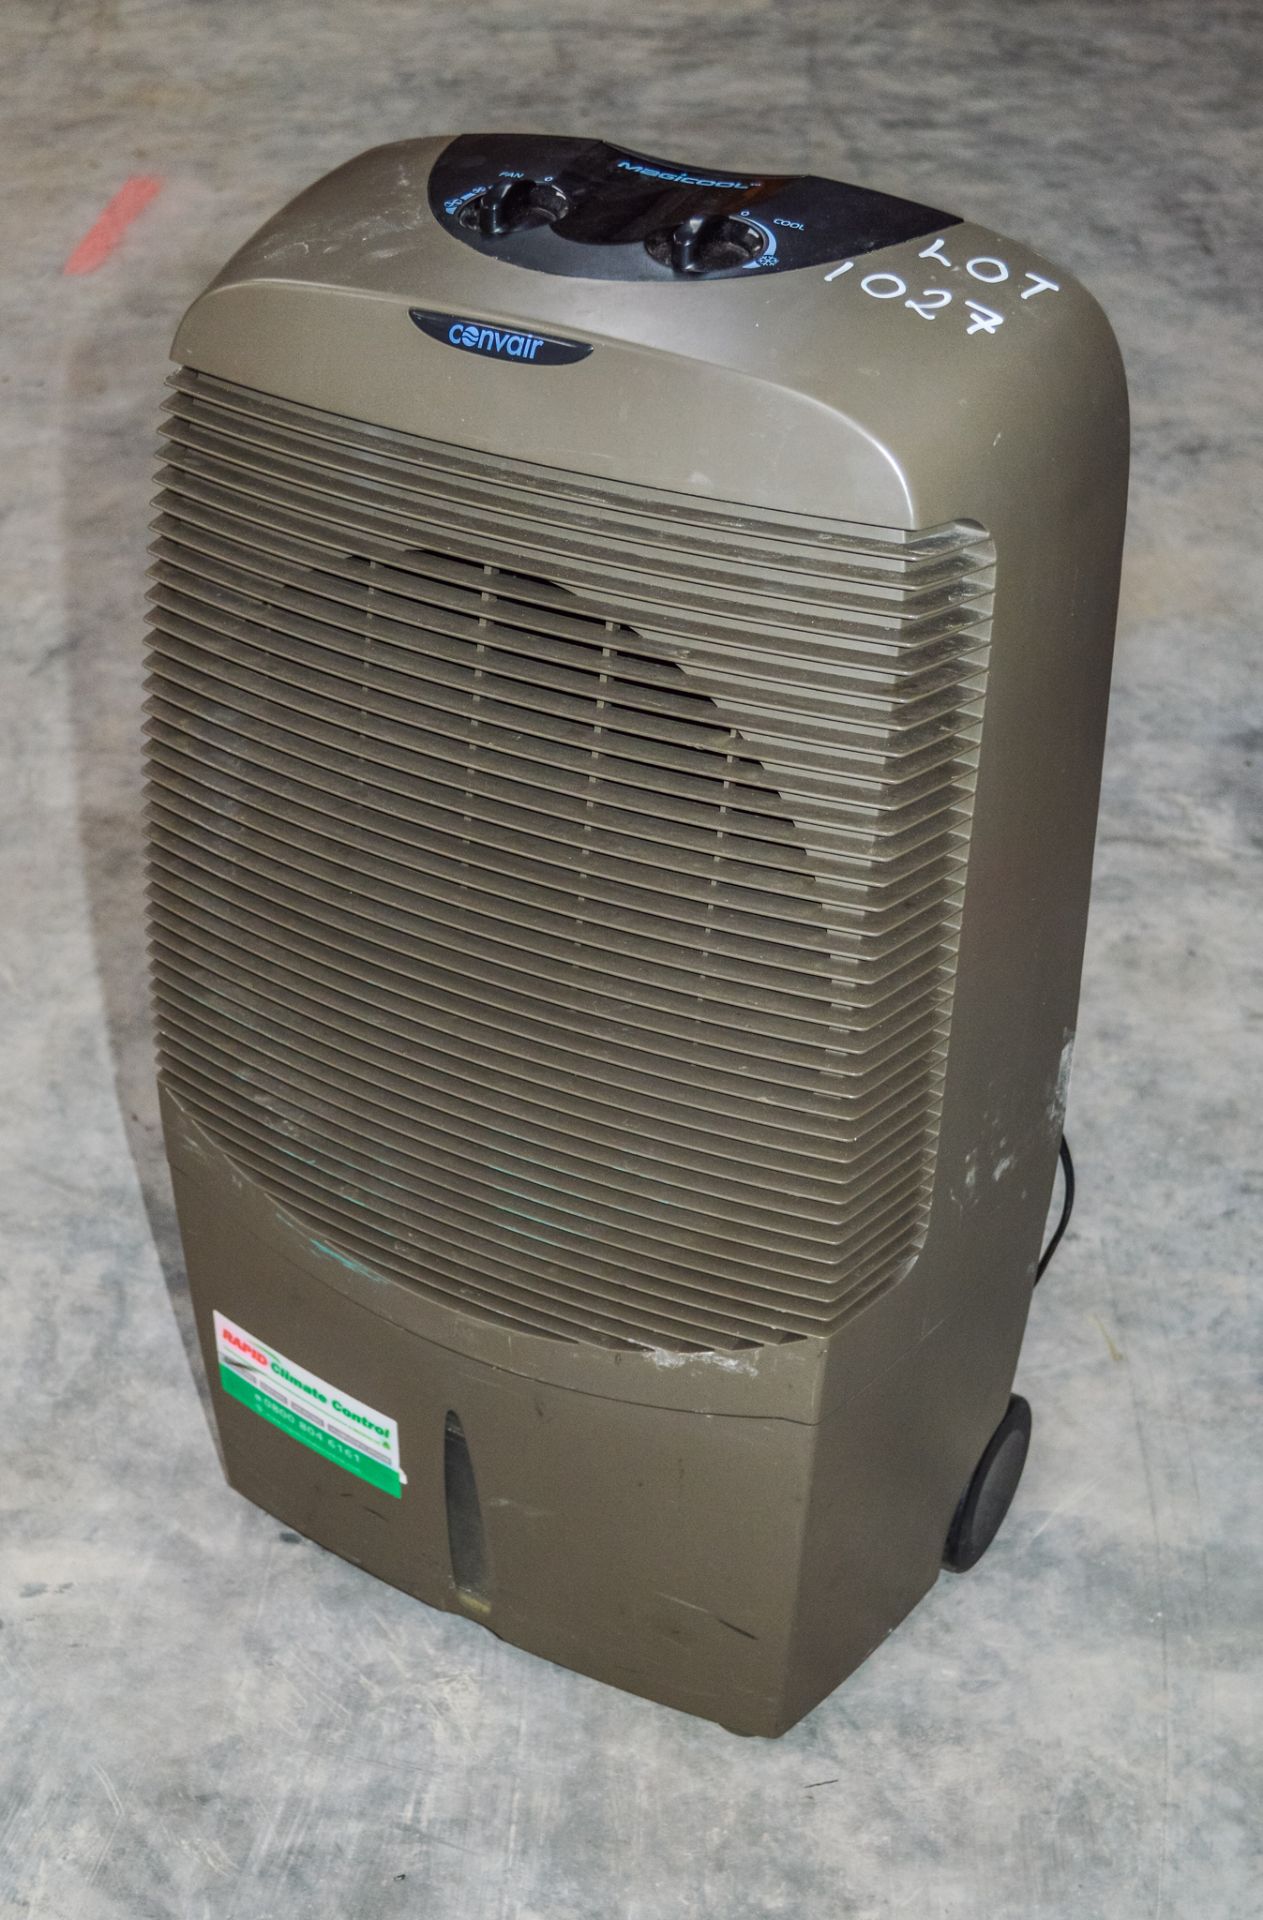 Convair Magic Cool 240v air conditioning unit 20195004